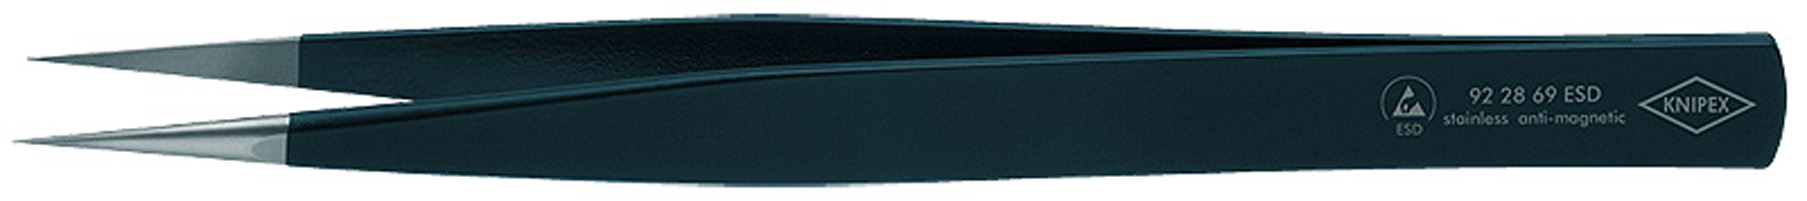 KNIPEX 92 28 69 ESD Präzisionspinzette Spitz kräftig 130 mm